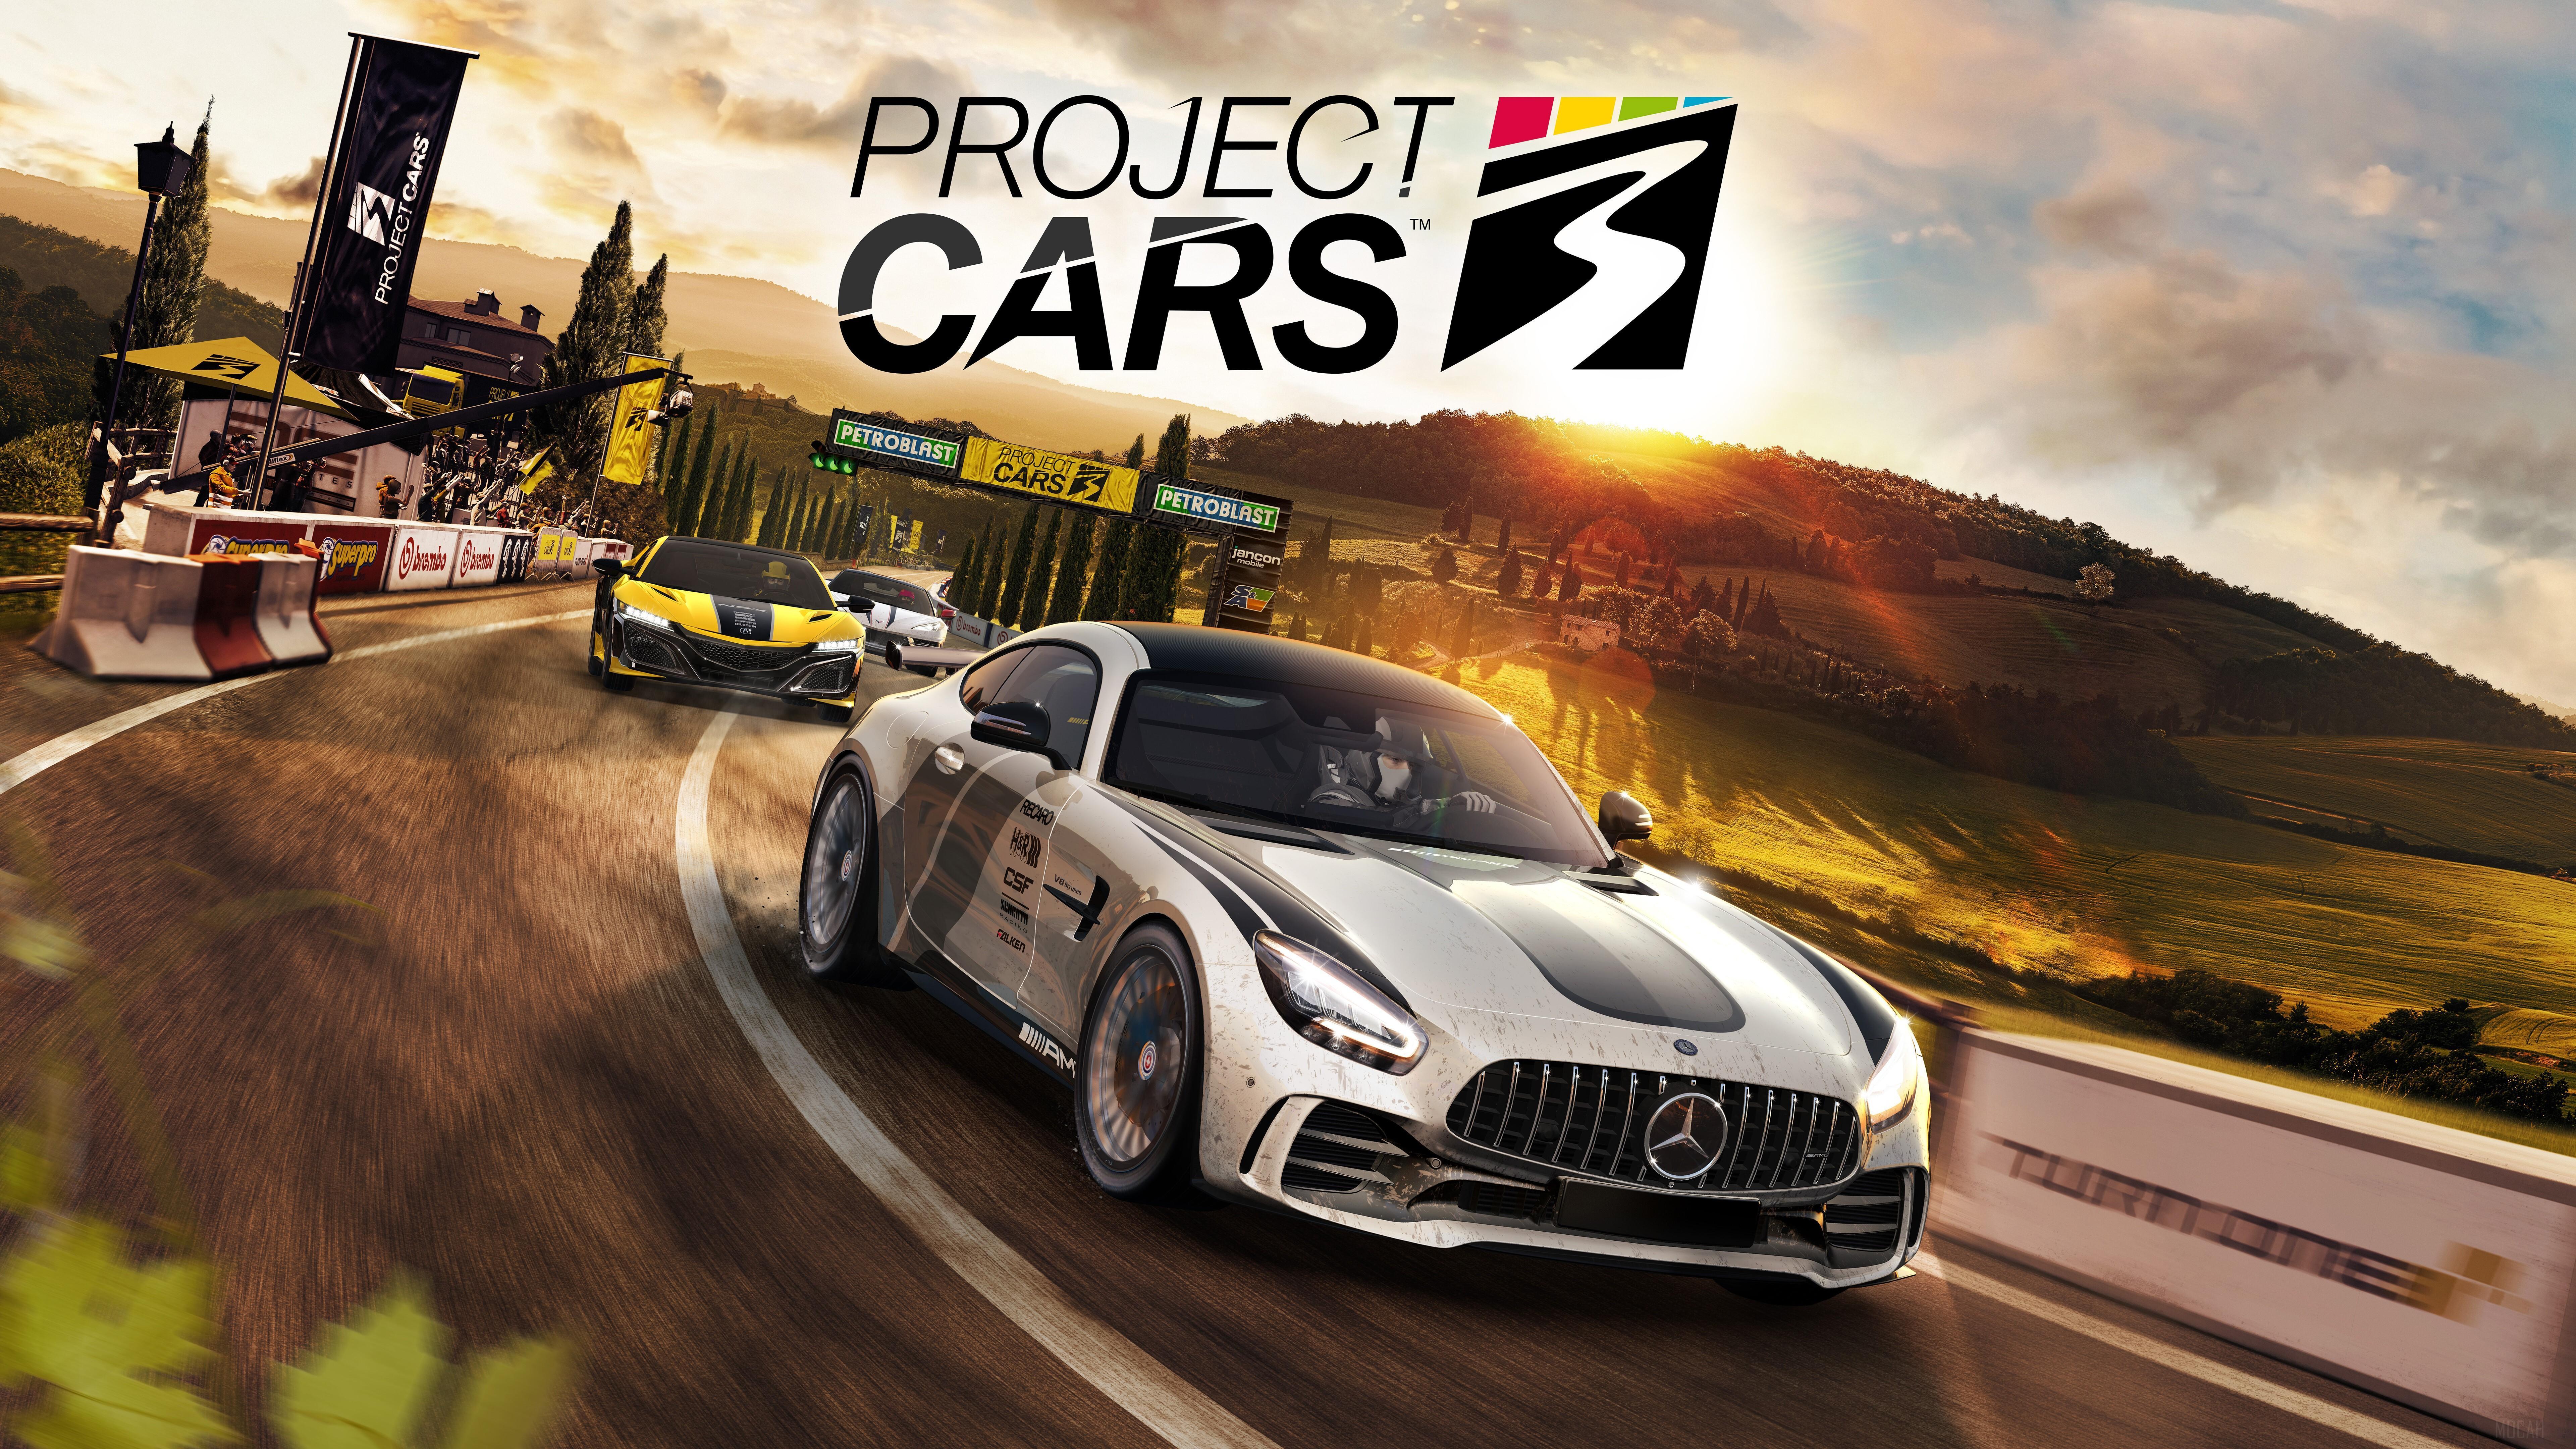 HD wallpaper, Project Cars 3, Racing, Key, Video Game, Art 4K